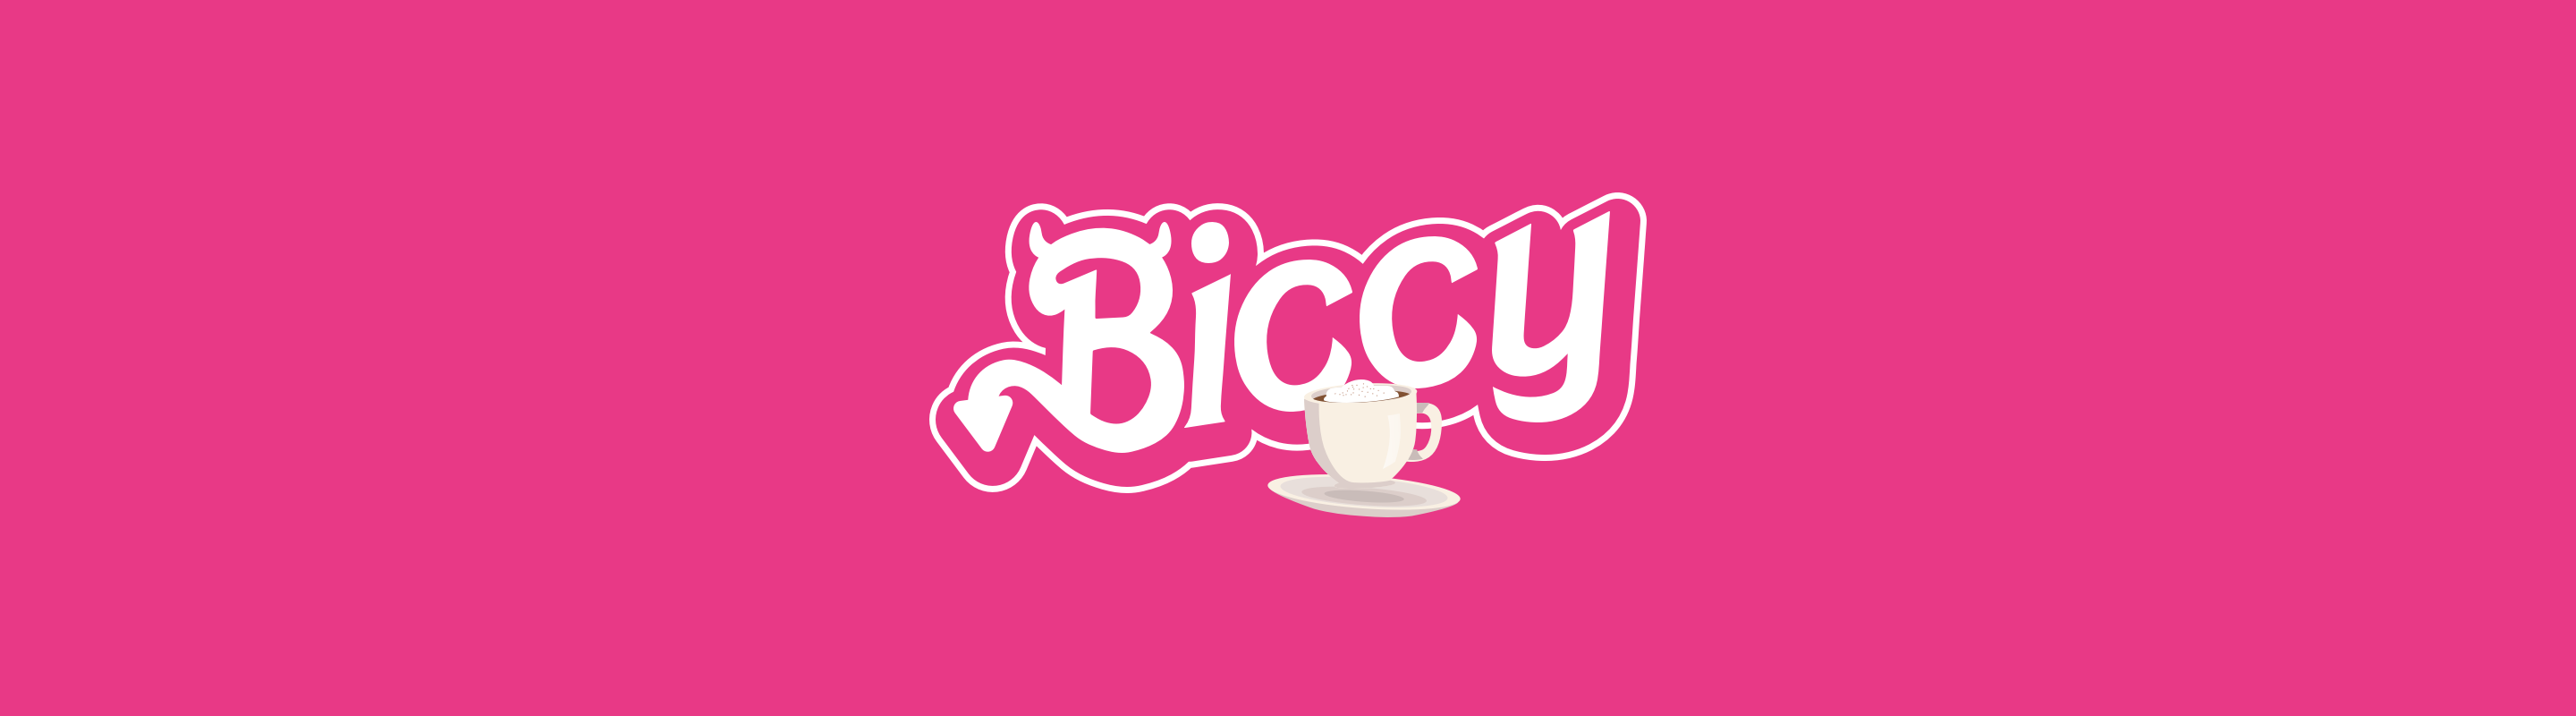 biccy-case-study